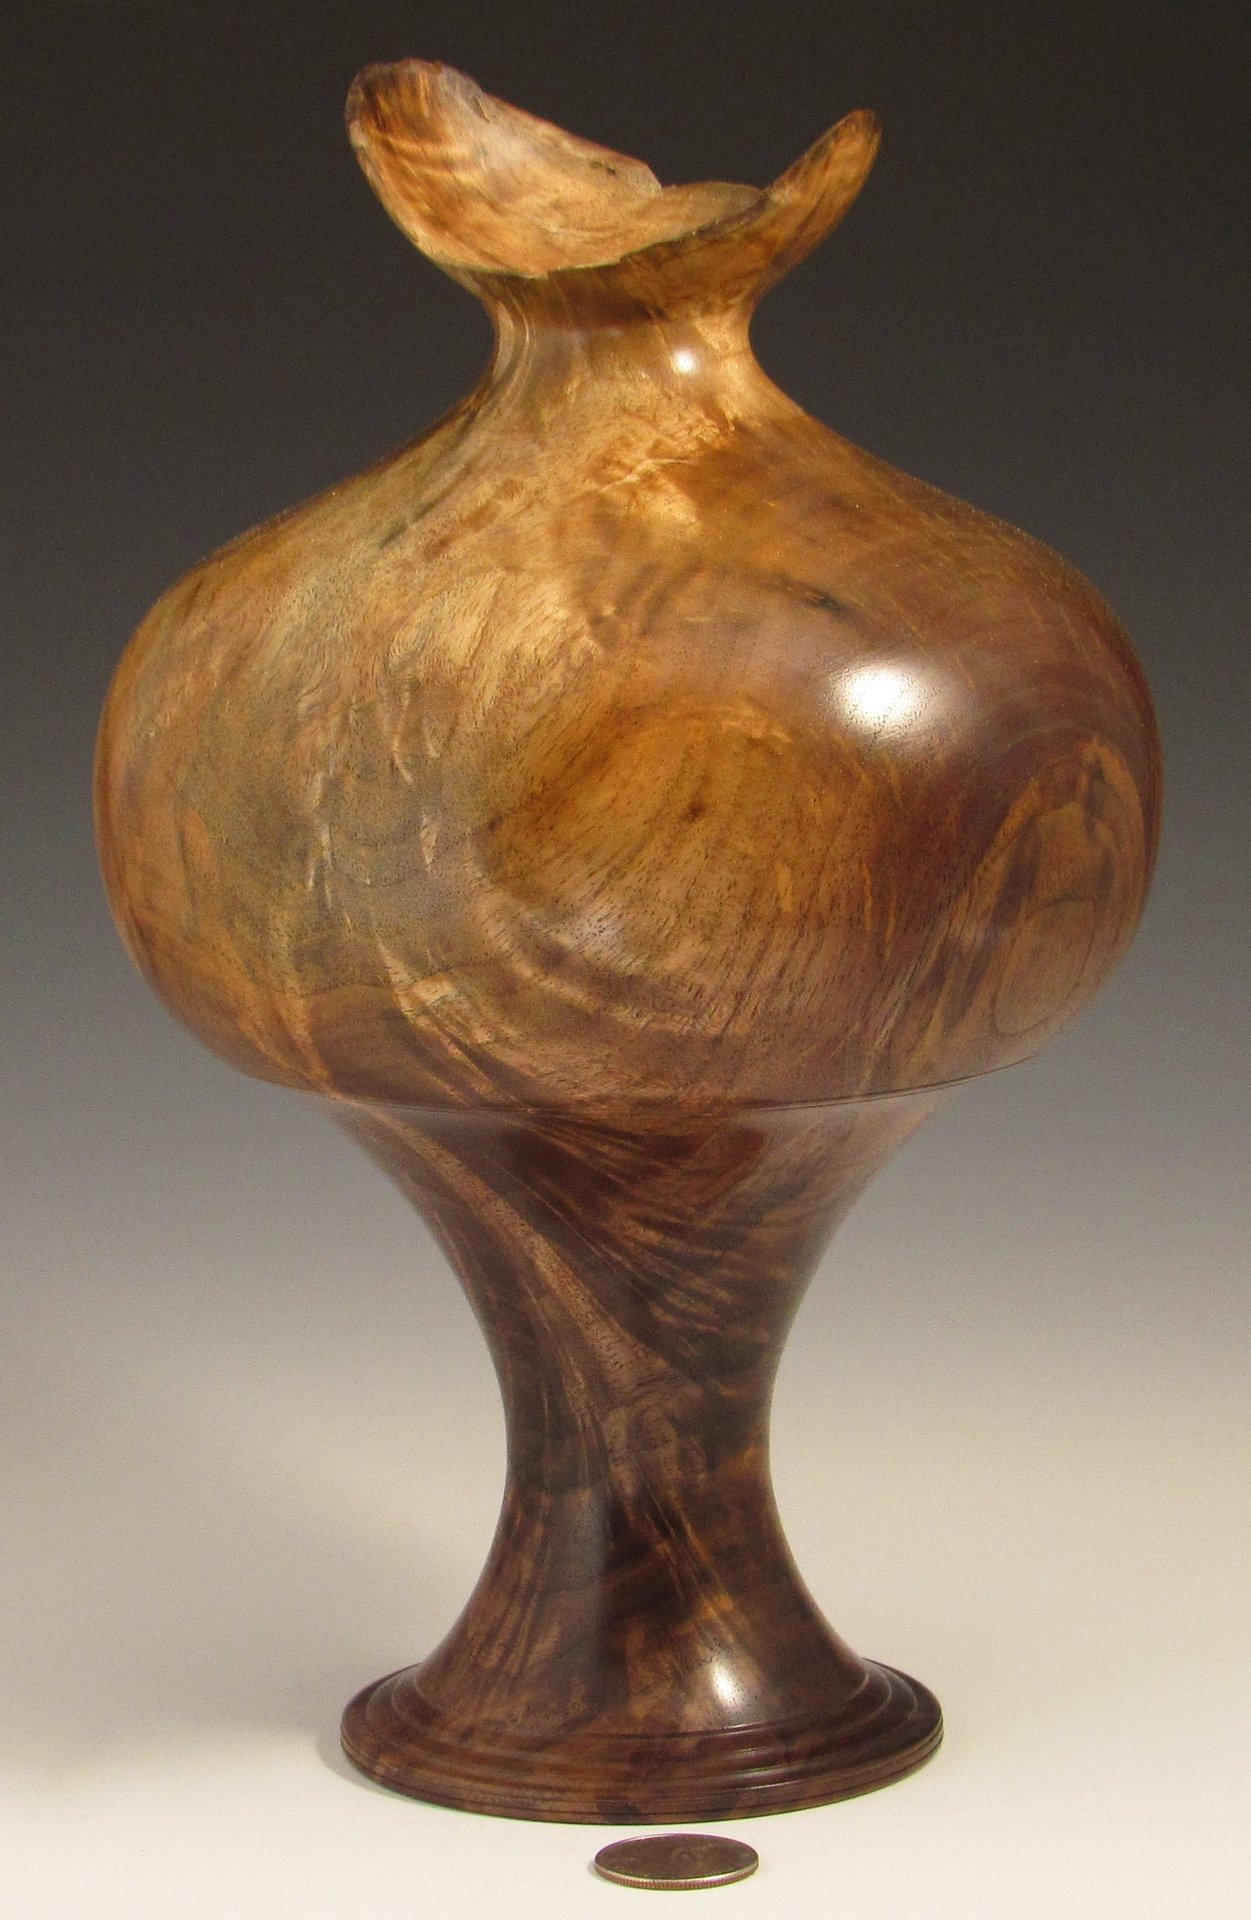 Walnut Crotch Vase